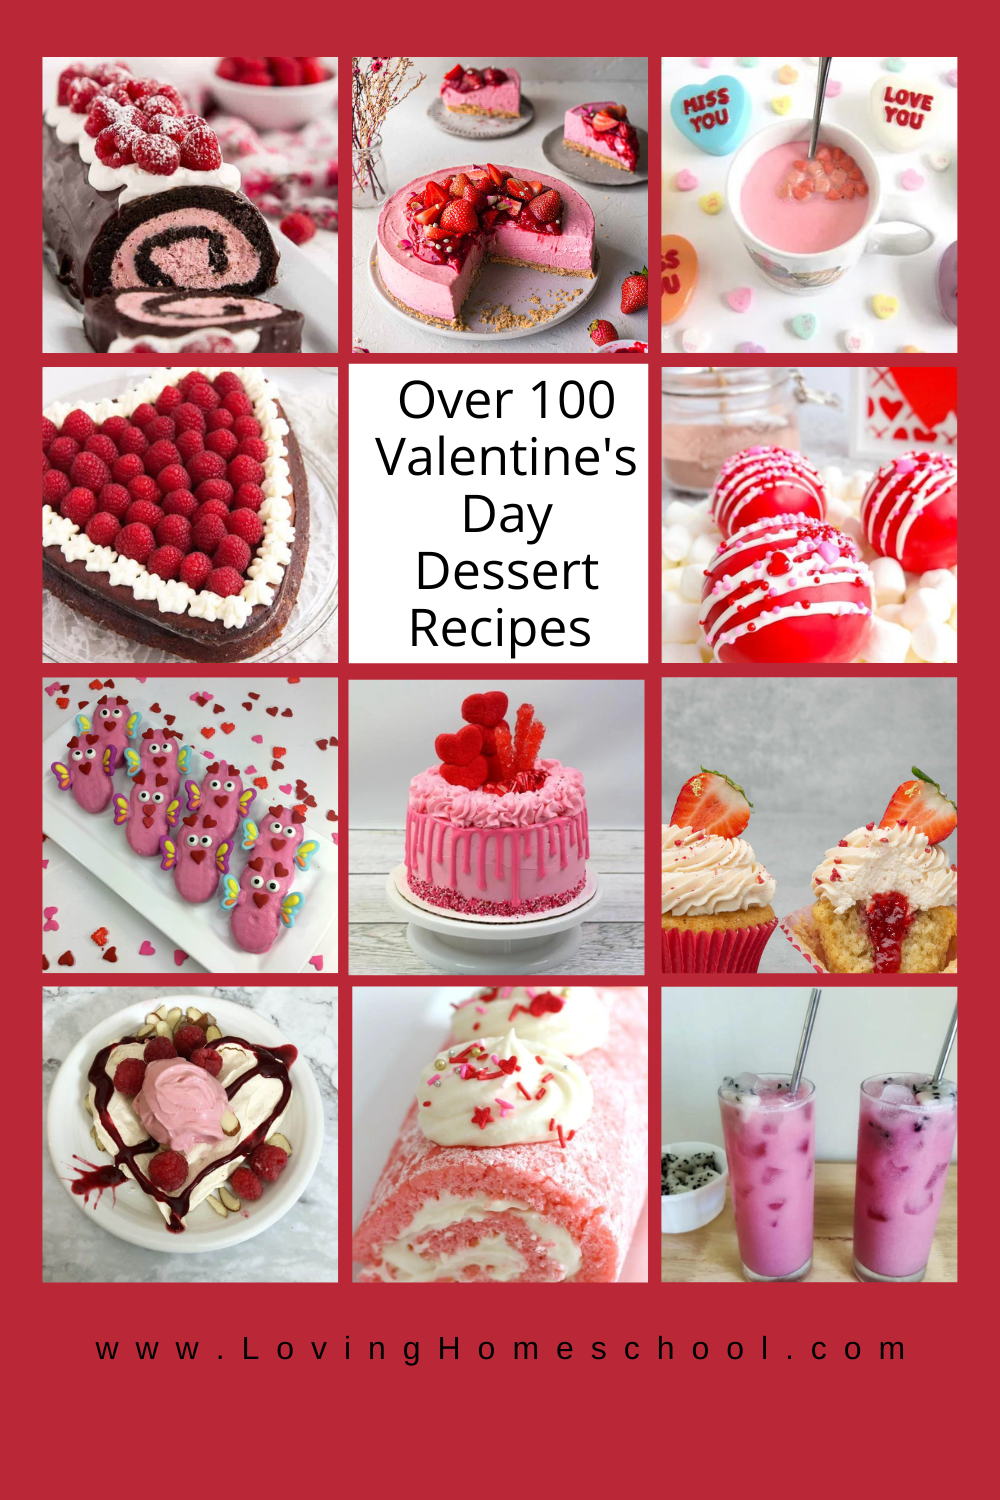 Over 100 Valentine's Day Dessert Recipes Pinterest Pin